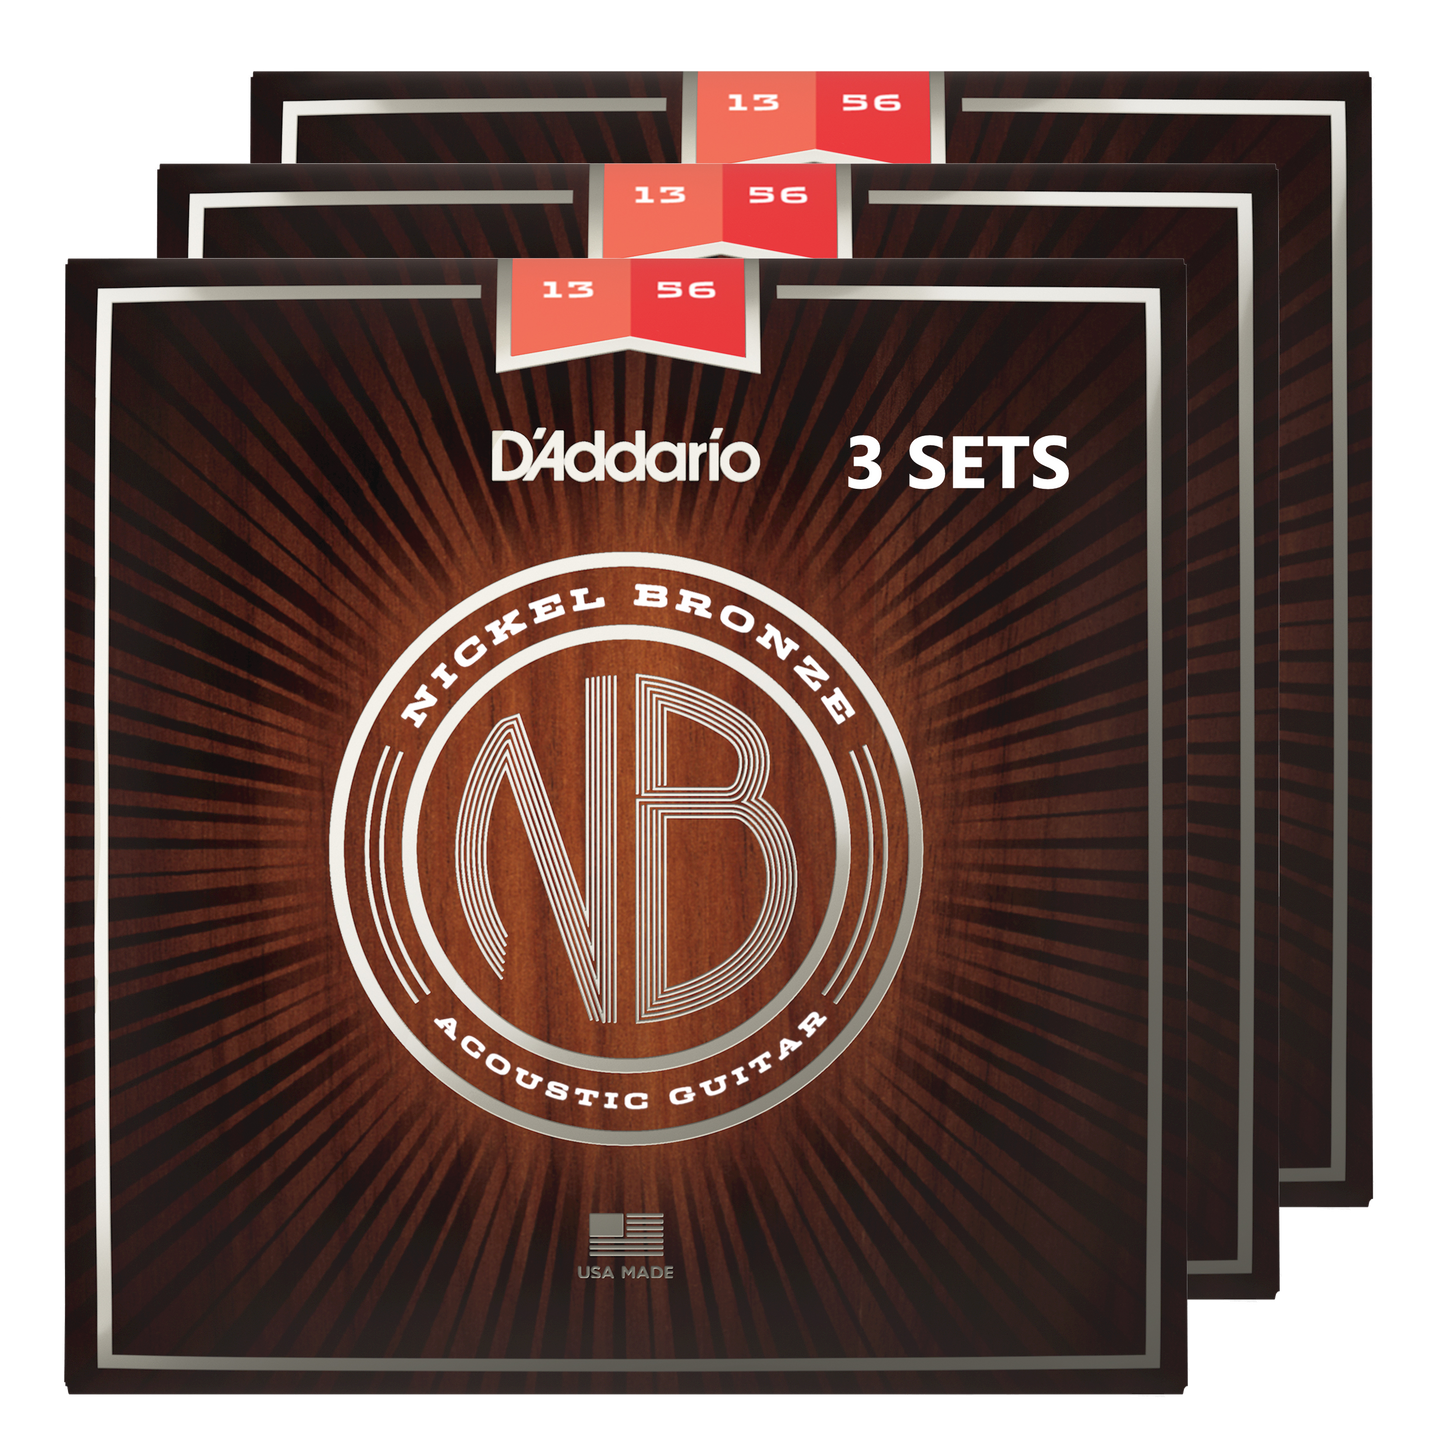 D'Addario NB1356-3P Nickel Bronze Acoustic Guitar Strings, Medium, 13-56 (3 SETS)